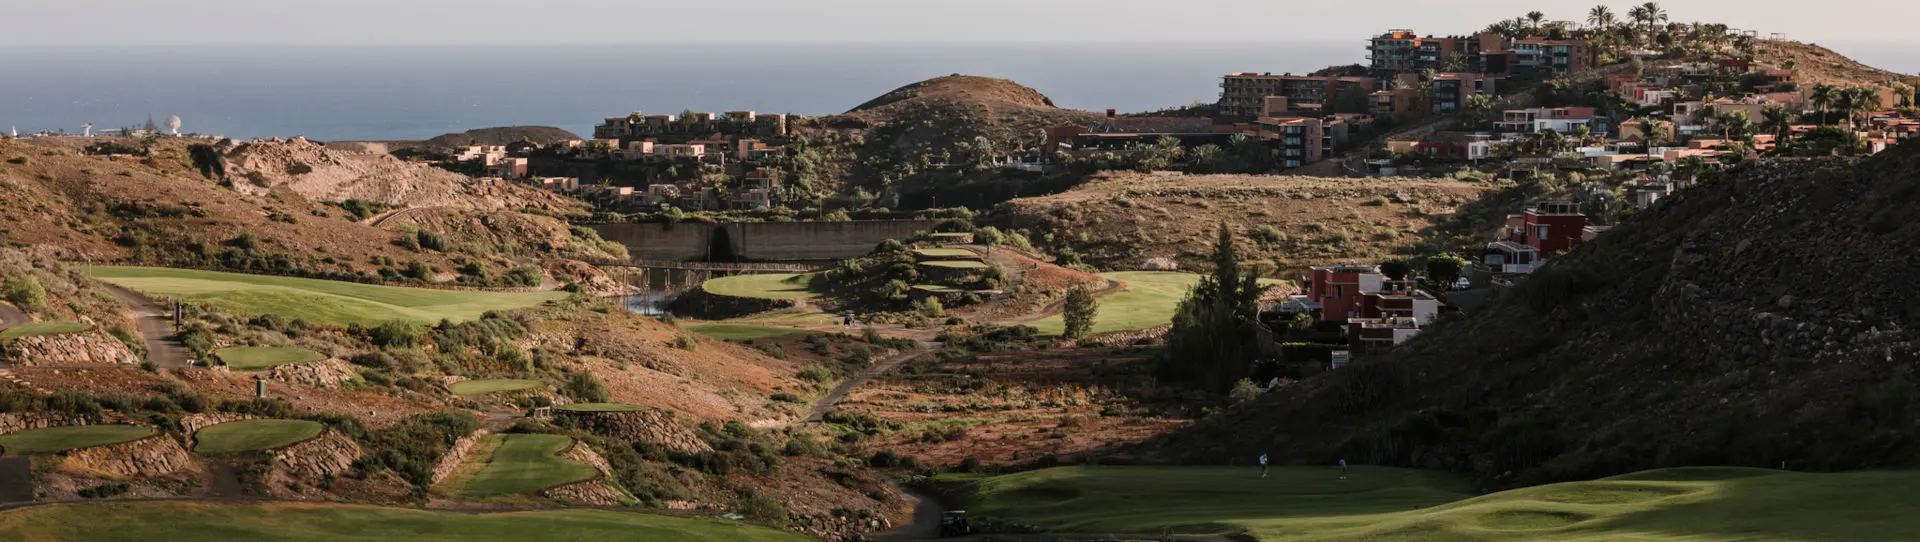 Spain golf courses - Salobre Golf New Course - Photo 1